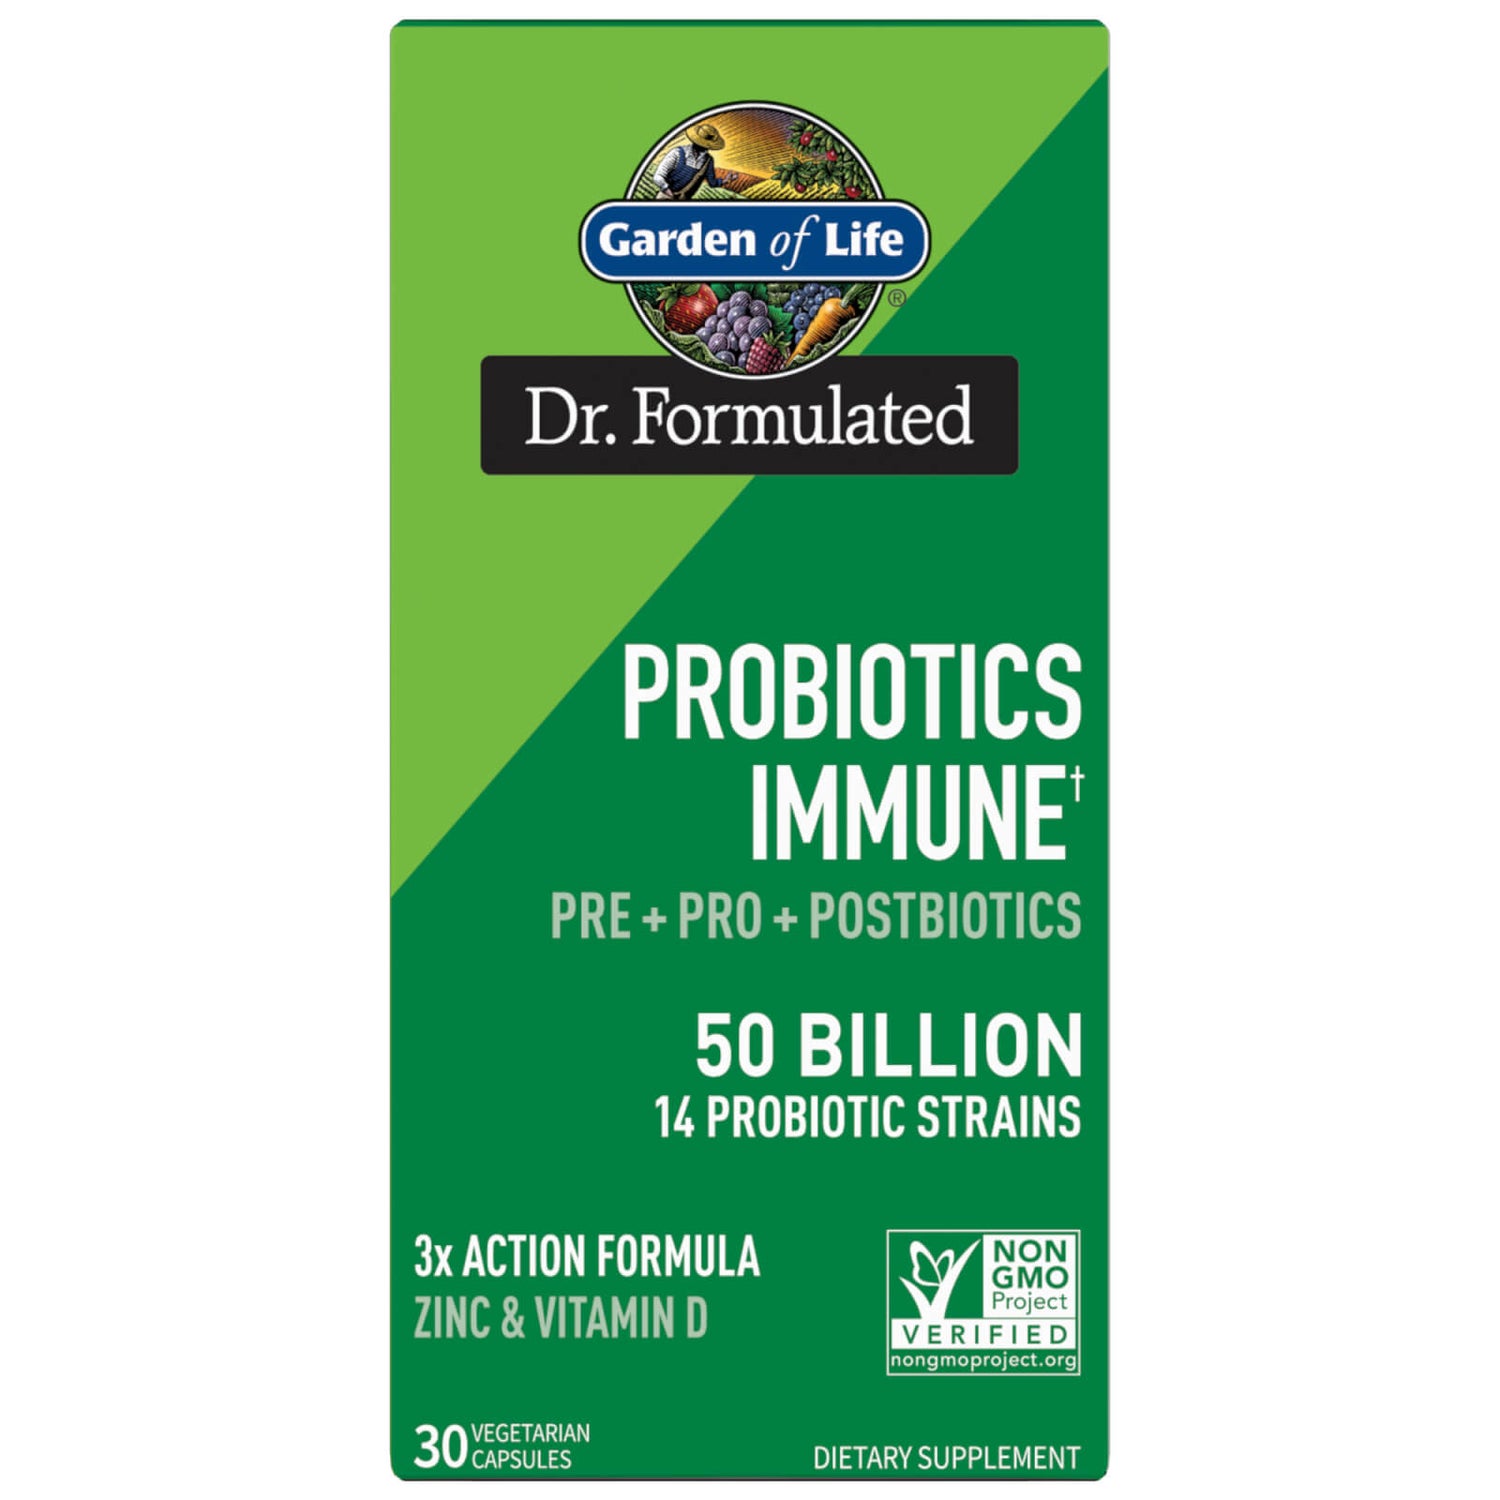 Microbiome immunité digestive Pre+Pro+Postbiotics 50B Dr. Formulated